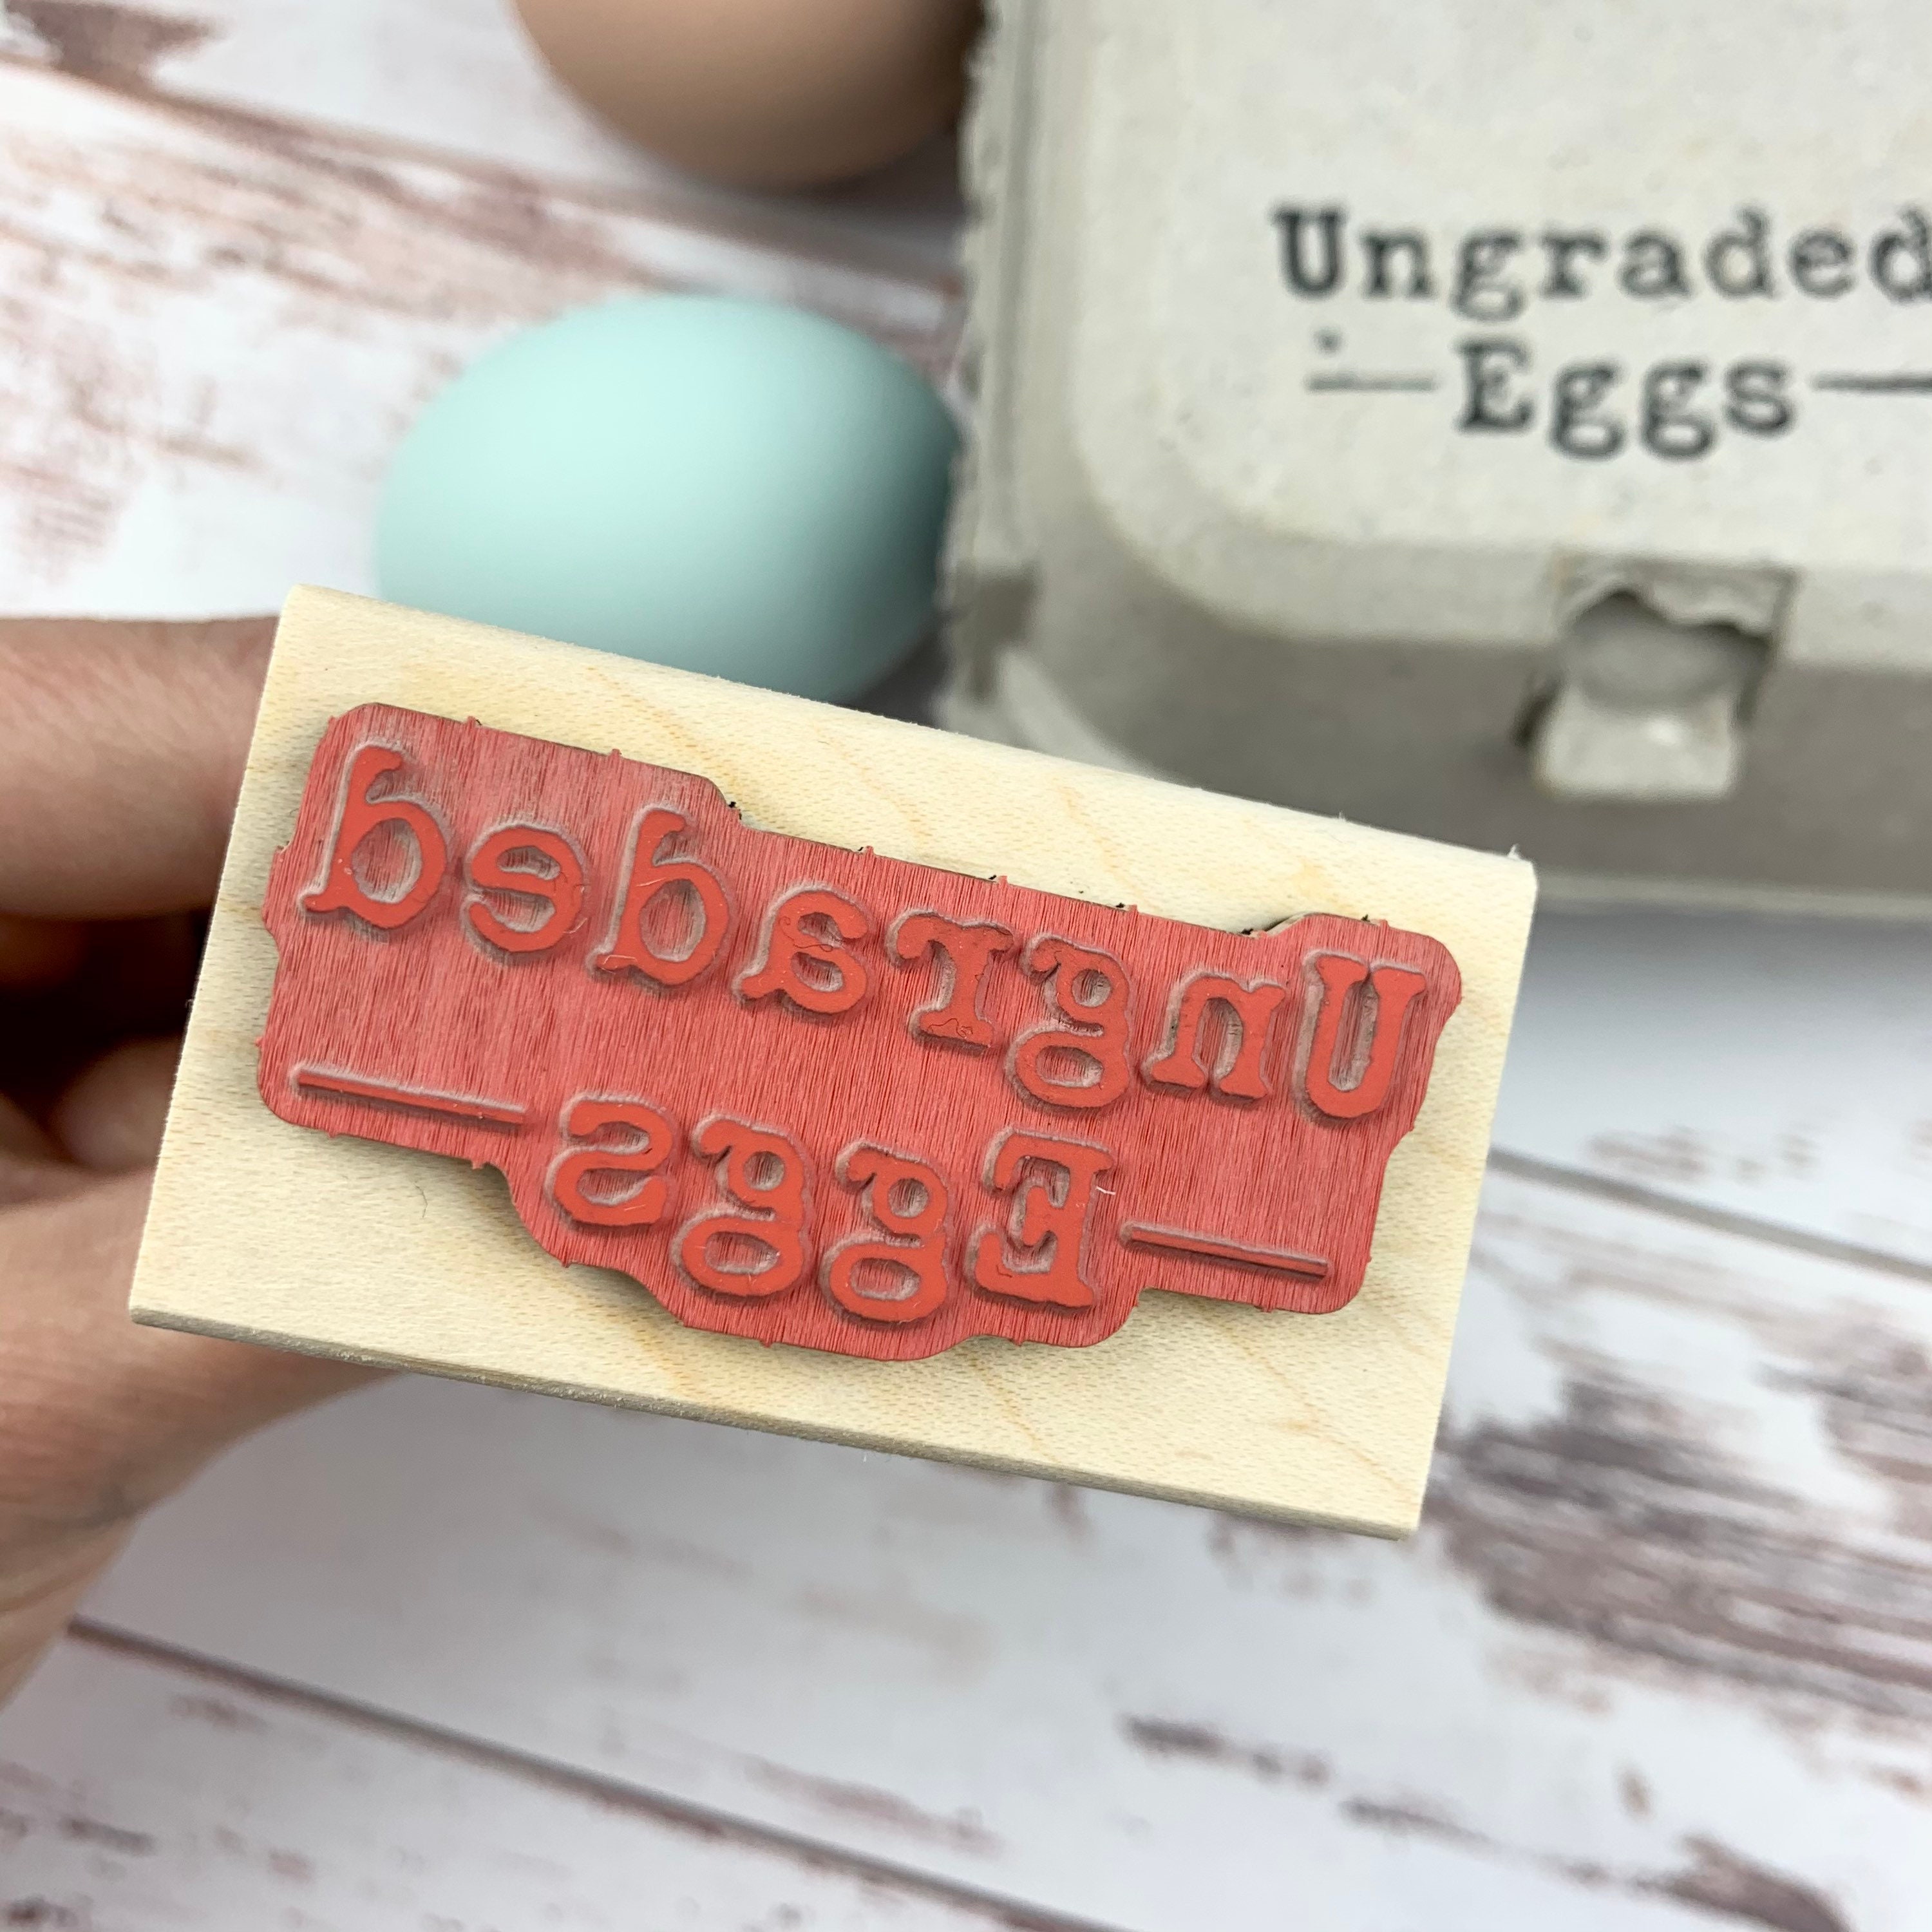 Egg Carton Rubber Stamp 1x3 Inch Farm Fresh Eggs Unwashed